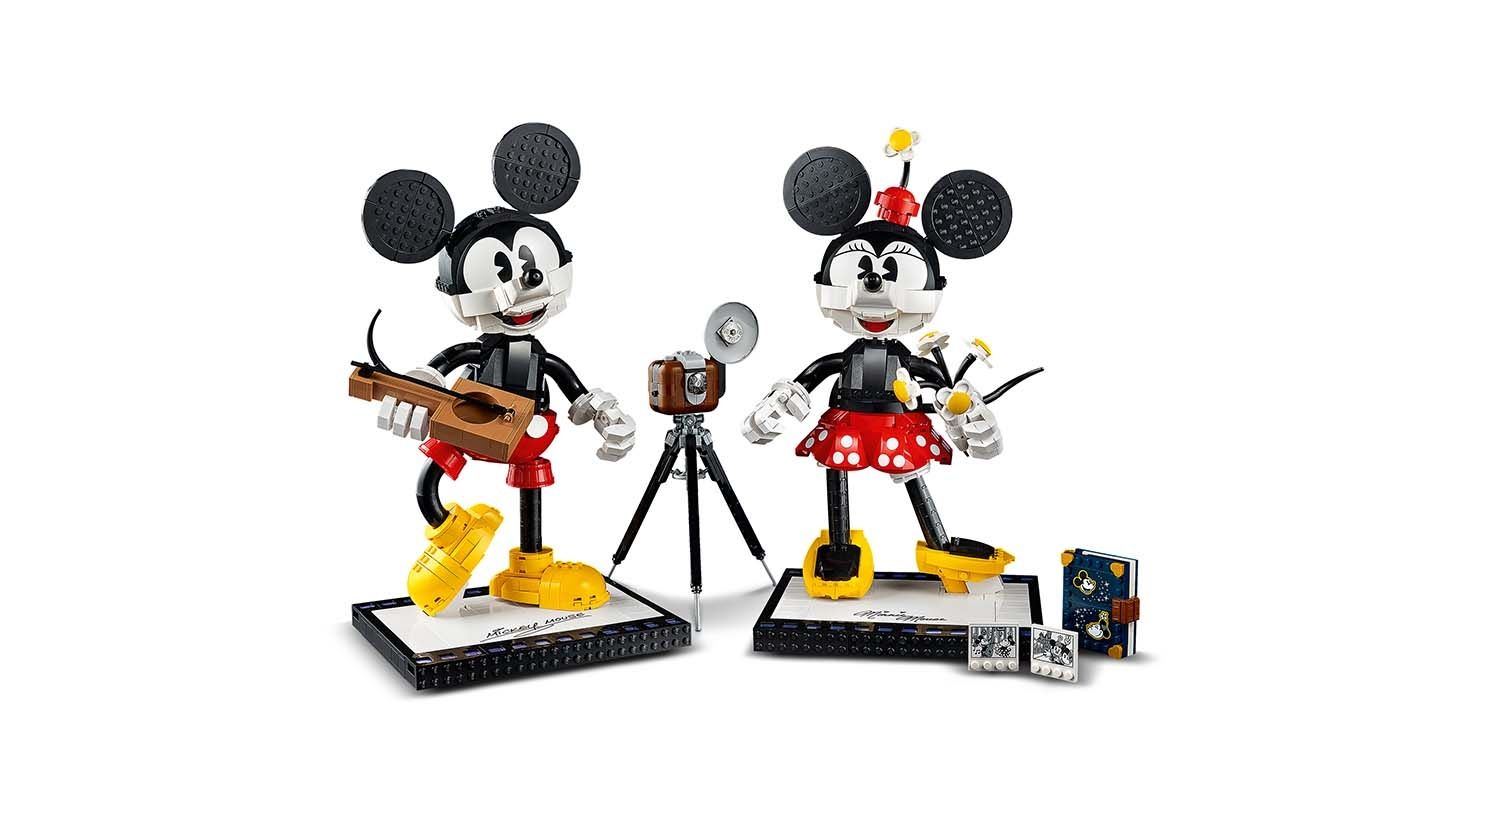 LEGO Disney 43179 Micky Maus und Minnie Maus LEGO_43179_WEB_SEC01_1488_WHITE_BG.jpg